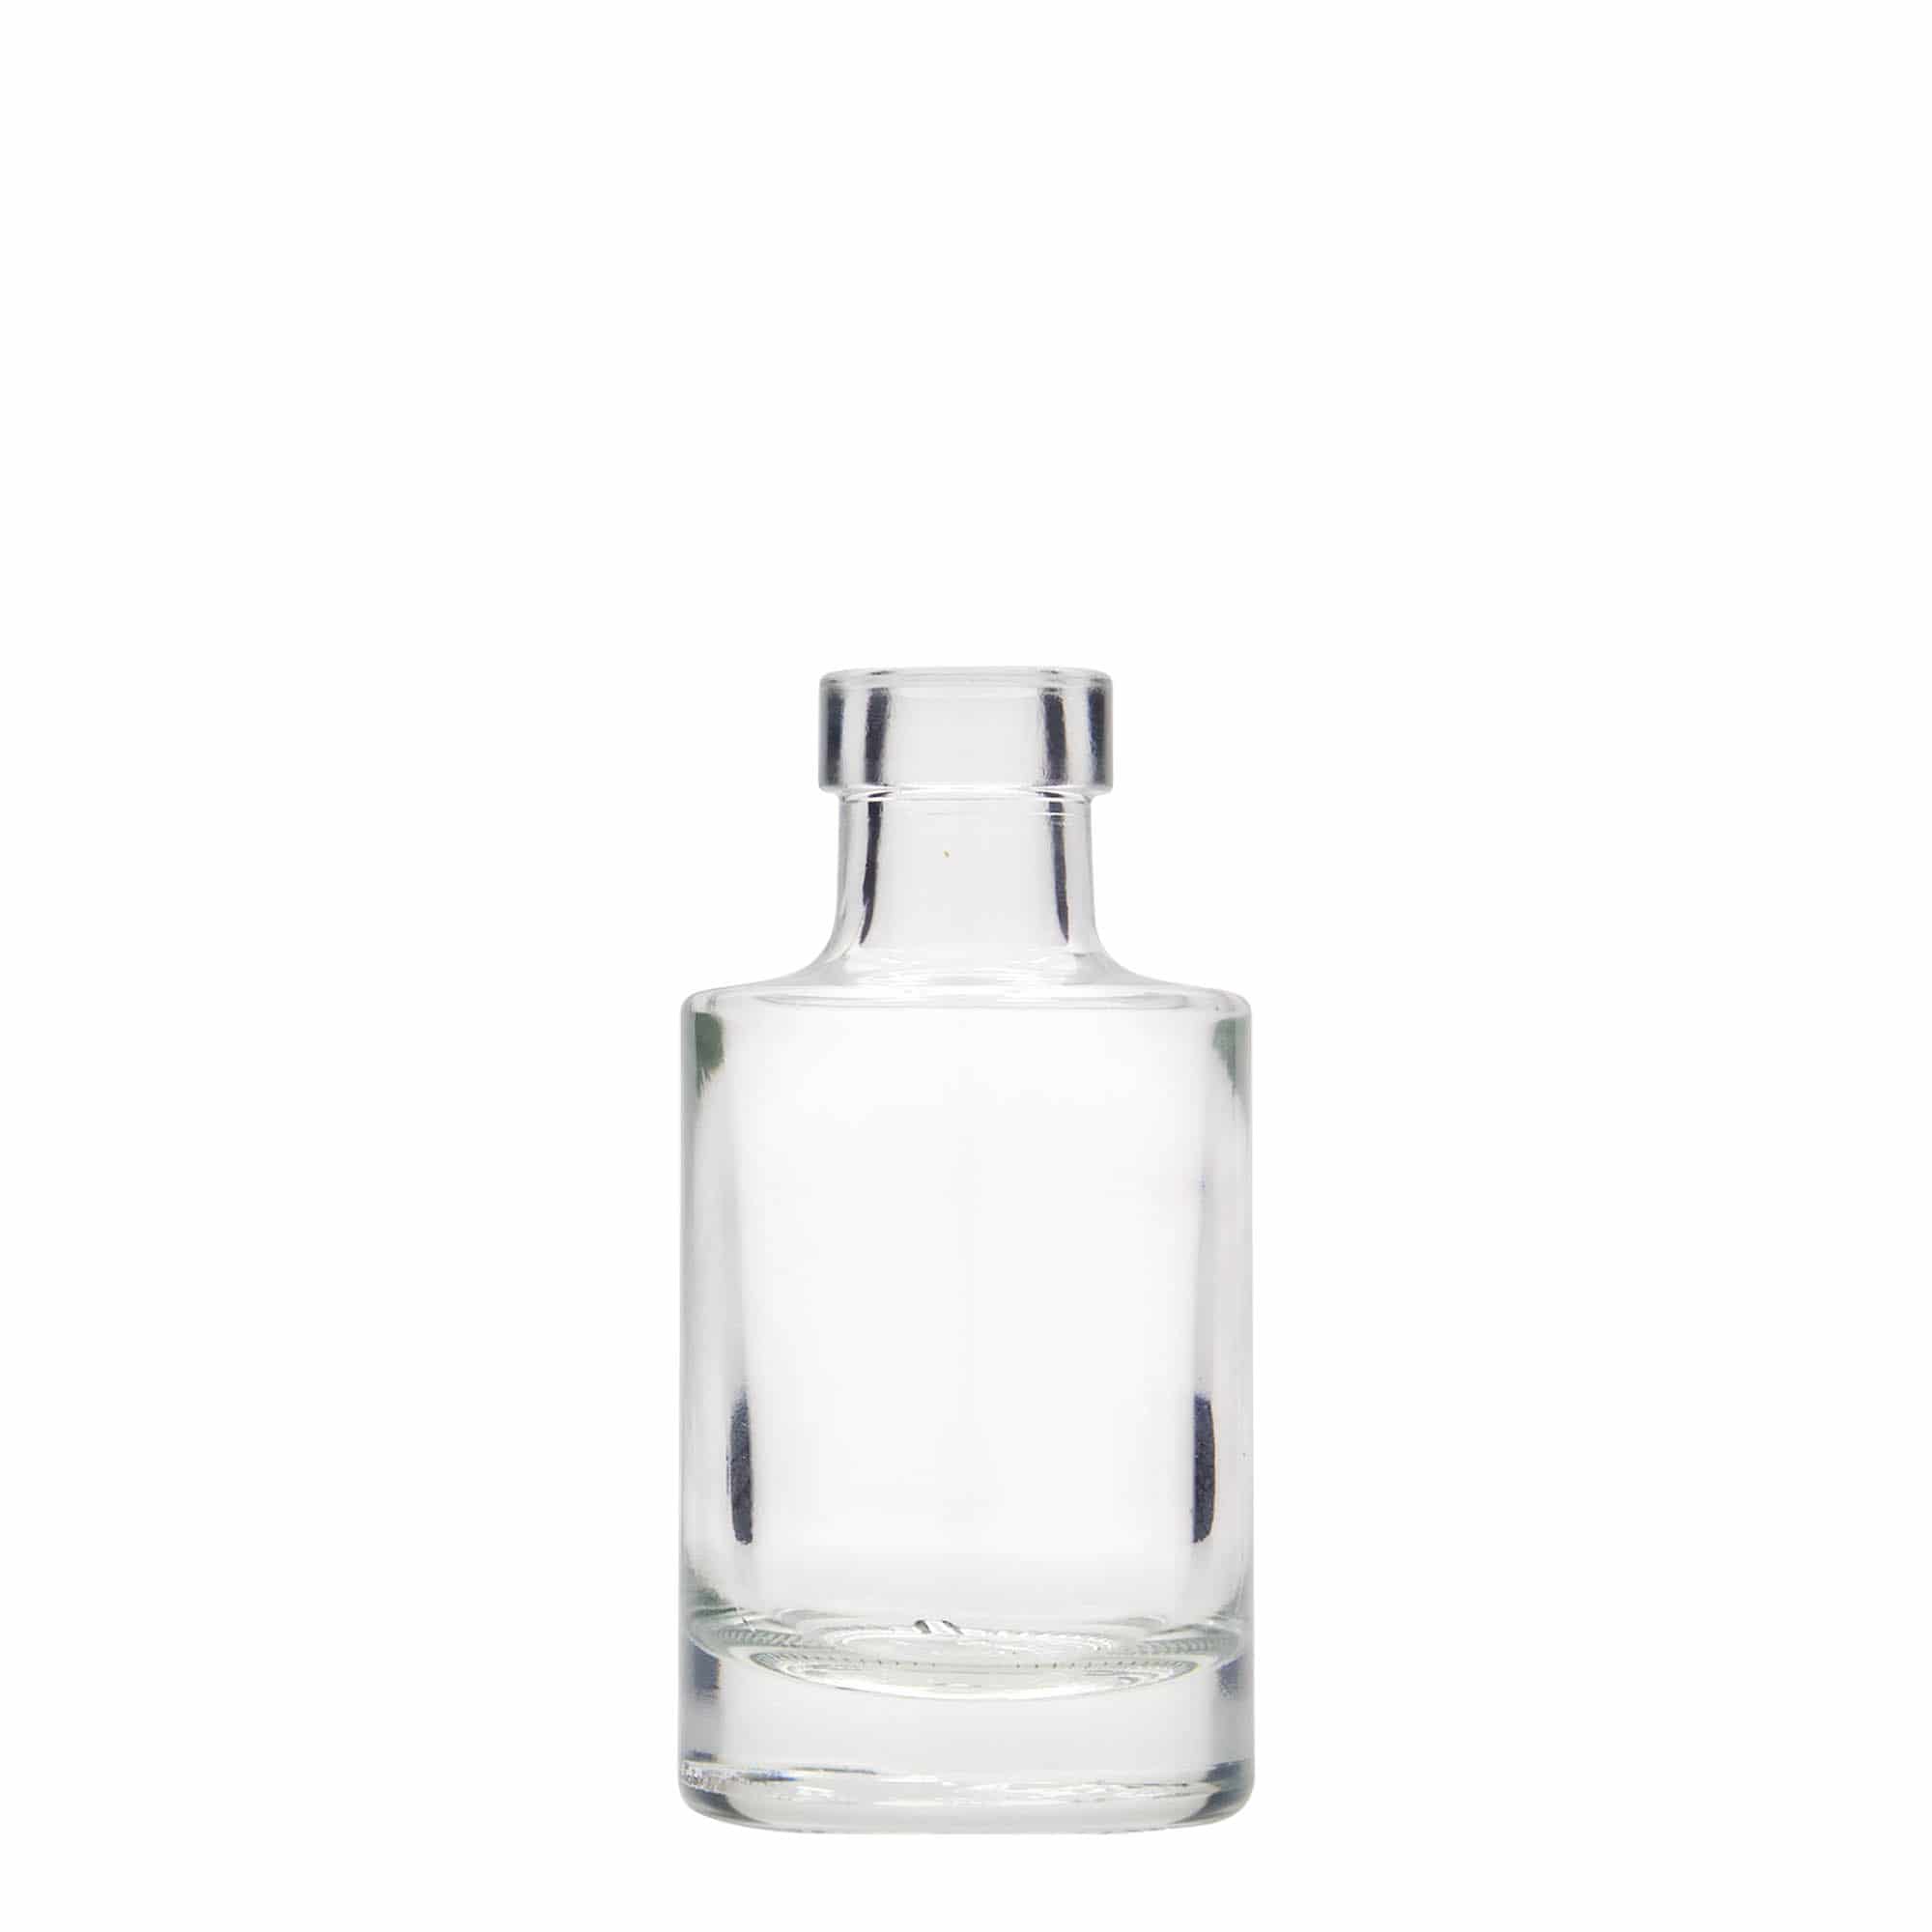 100 ml glass bottle 'Aventura', closure: cork